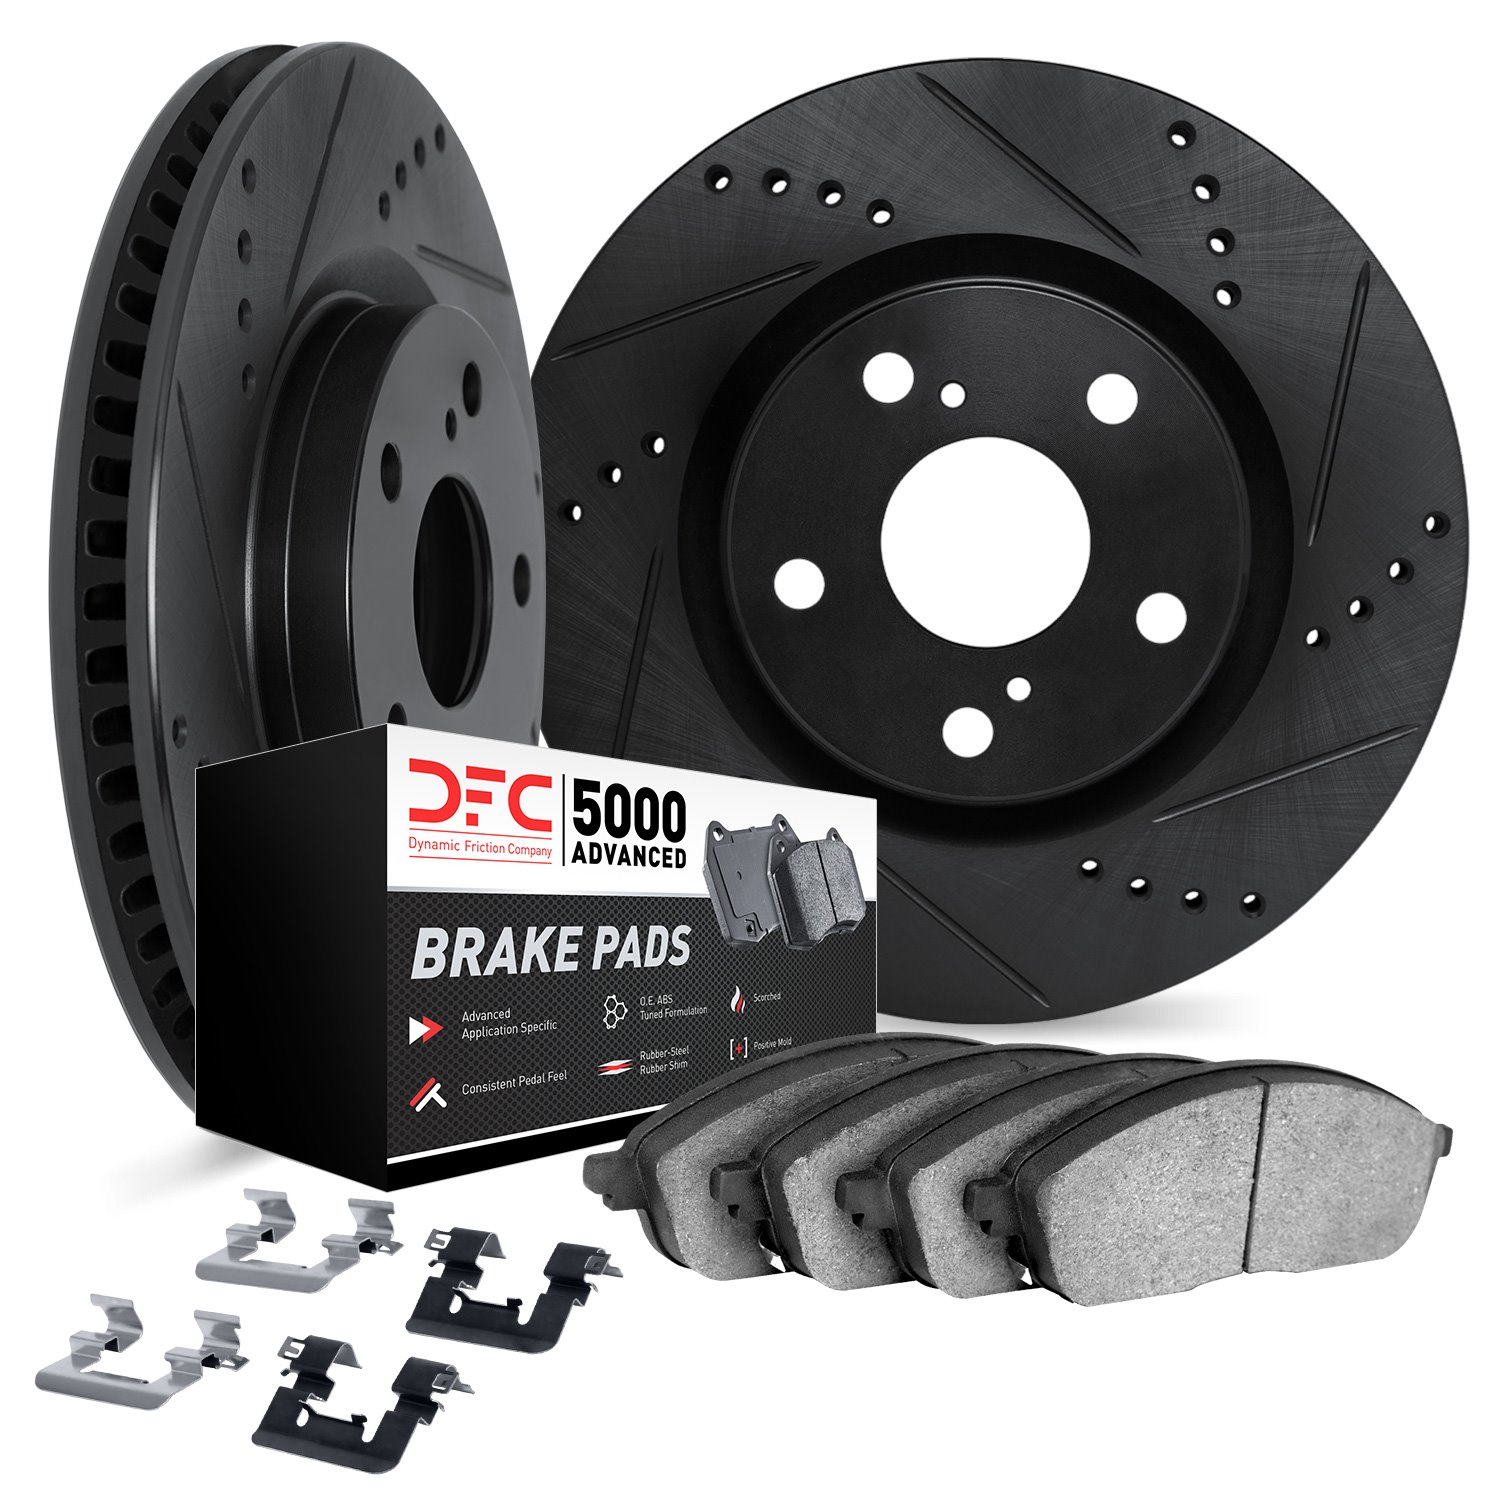 8512-11197 Drilled/Slotted Brake Rotors w/5000 Advanced Brake Pads Kit & Hardware [Black], Fits Select Multiple Makes/Models, Po